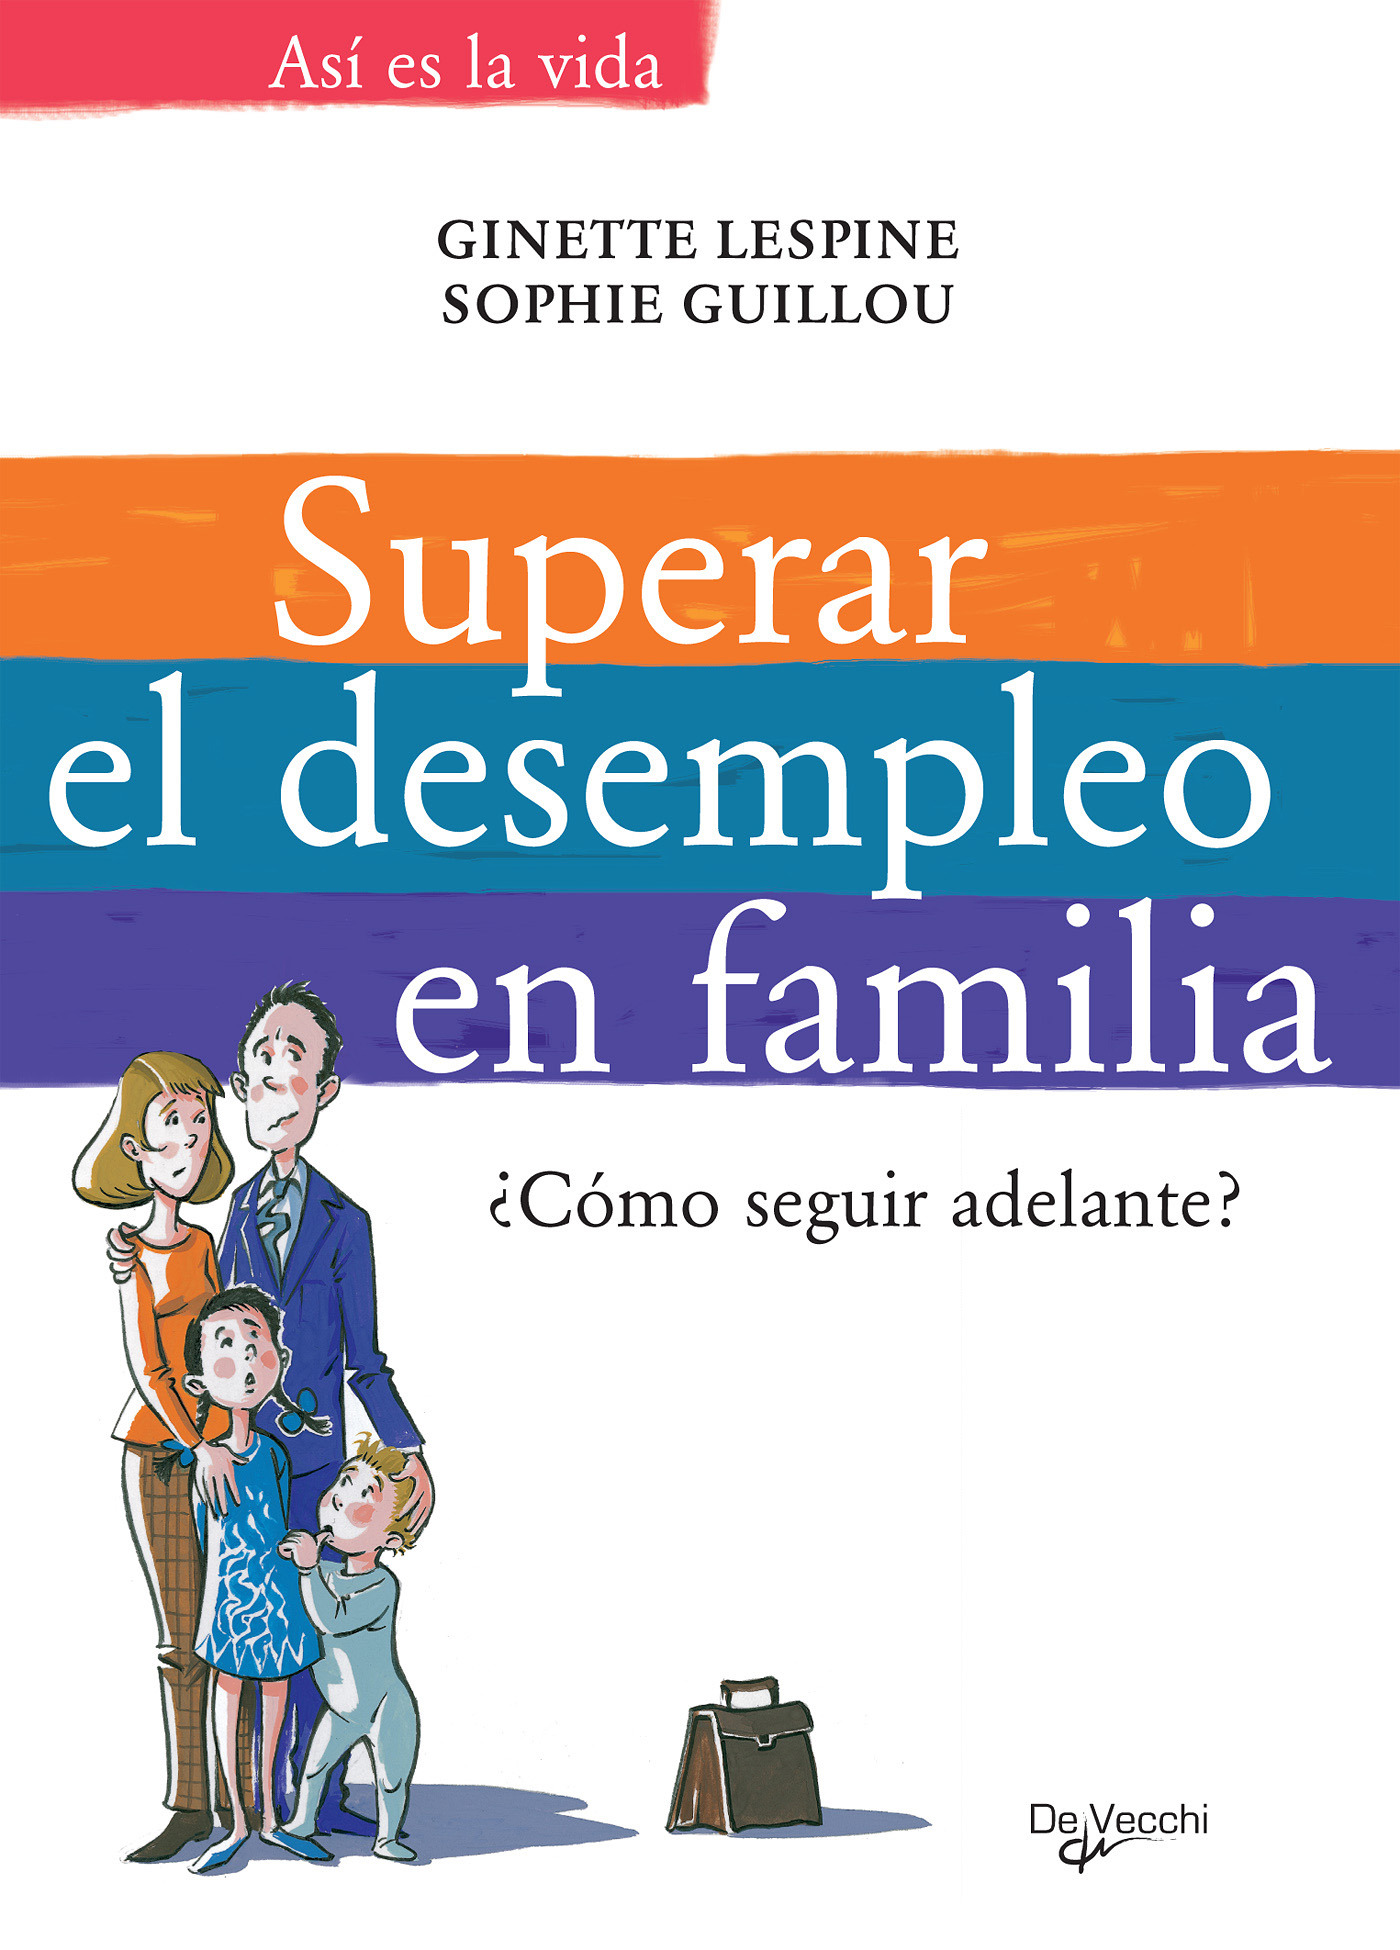 Guillou, Sophie - Superar el desempleo en familia, ebook